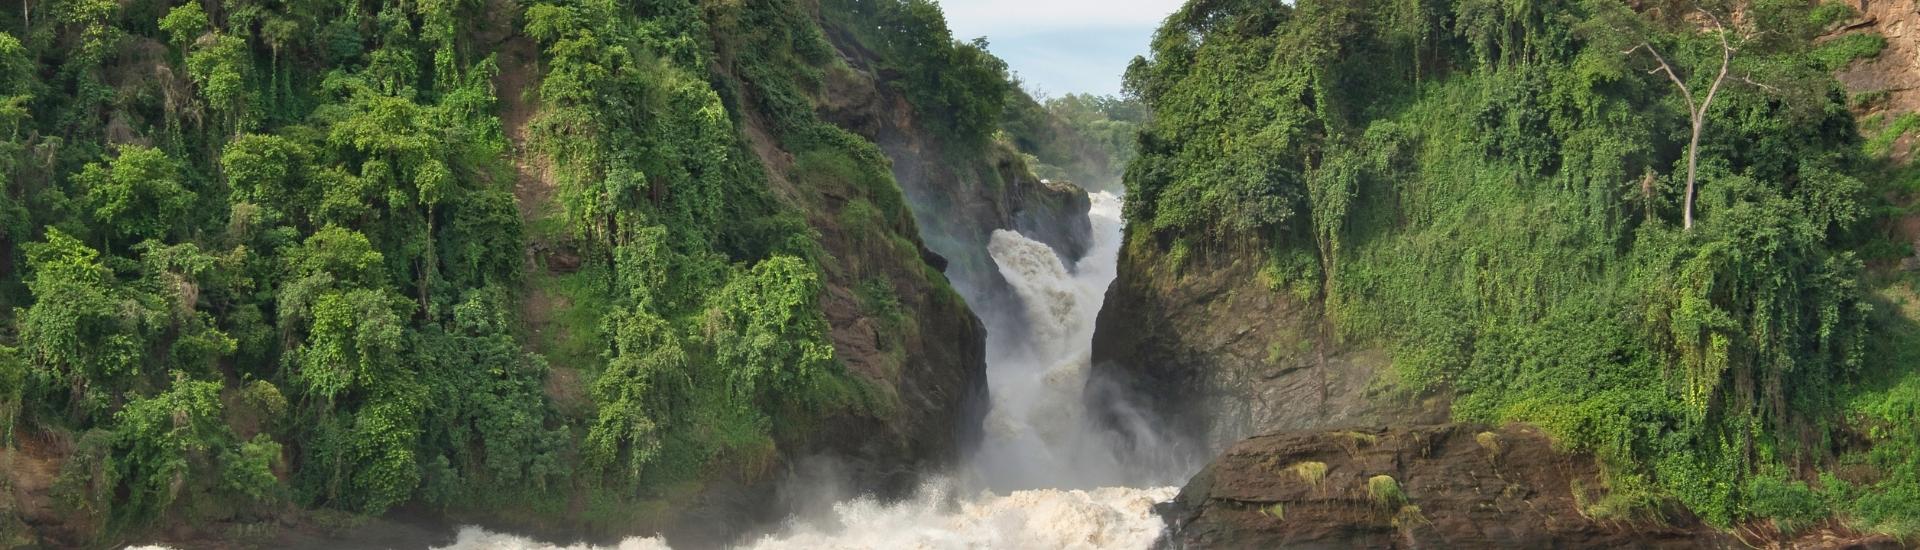 Thundering canyon waterfall in Murchison Falls National Park, Uganda